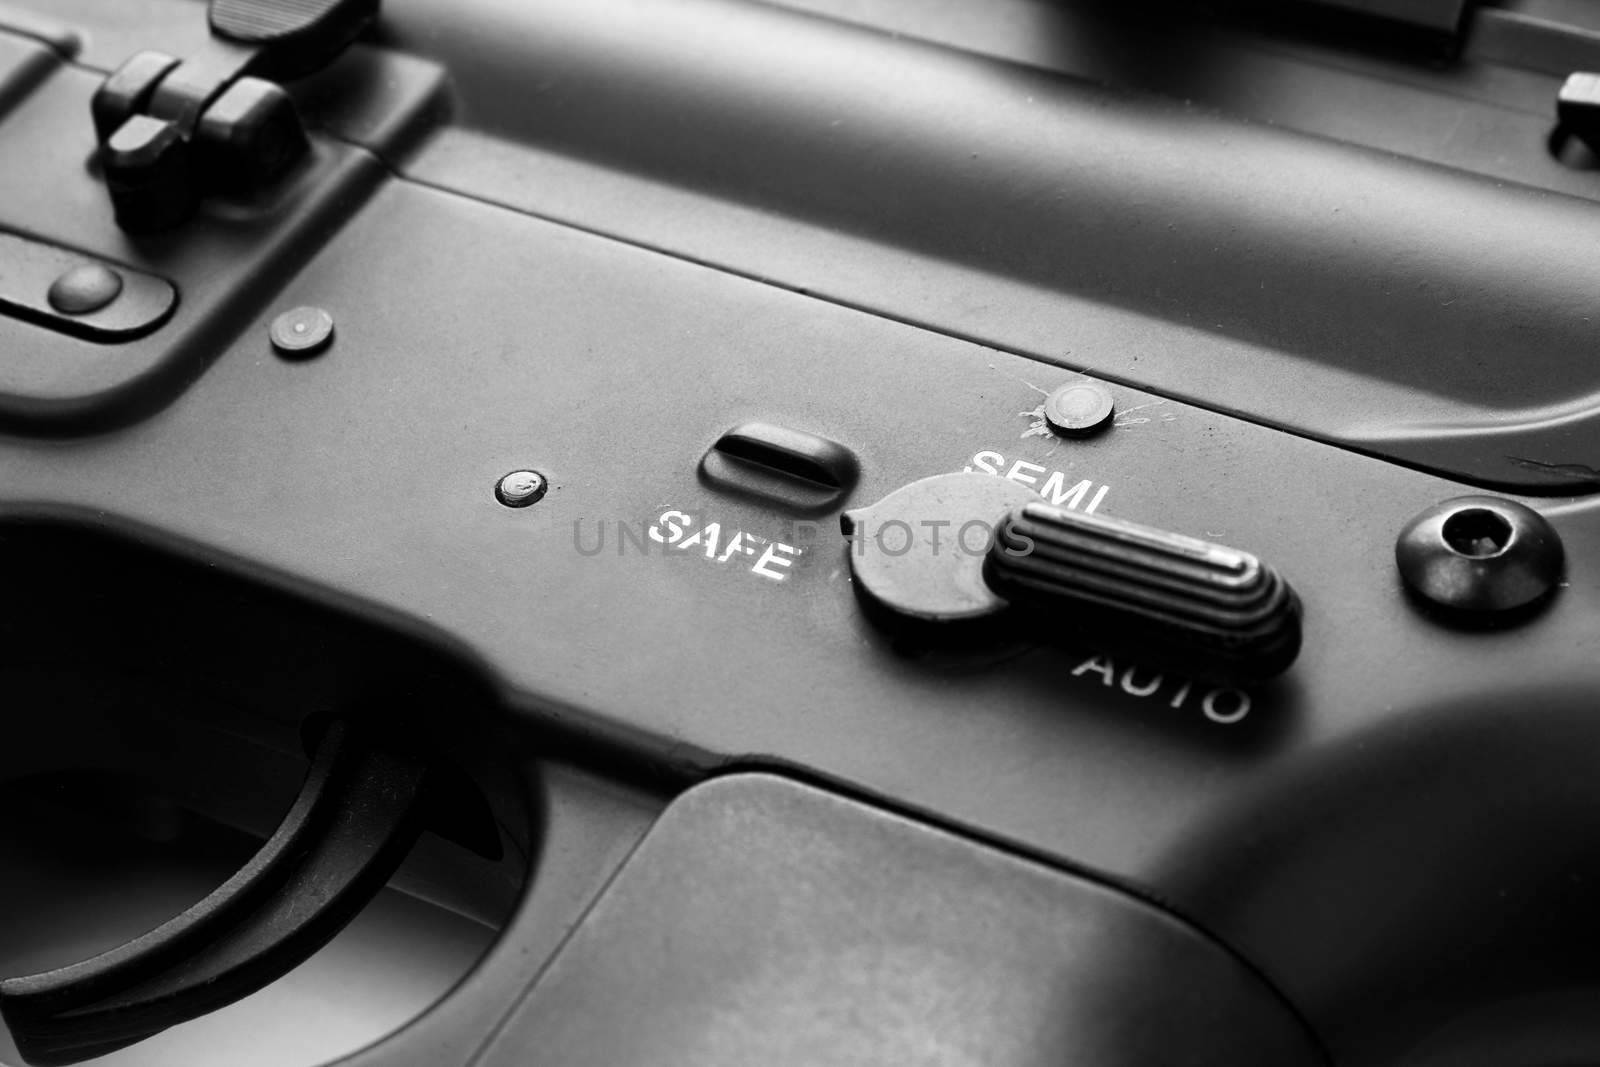 Gun switch on safe mode